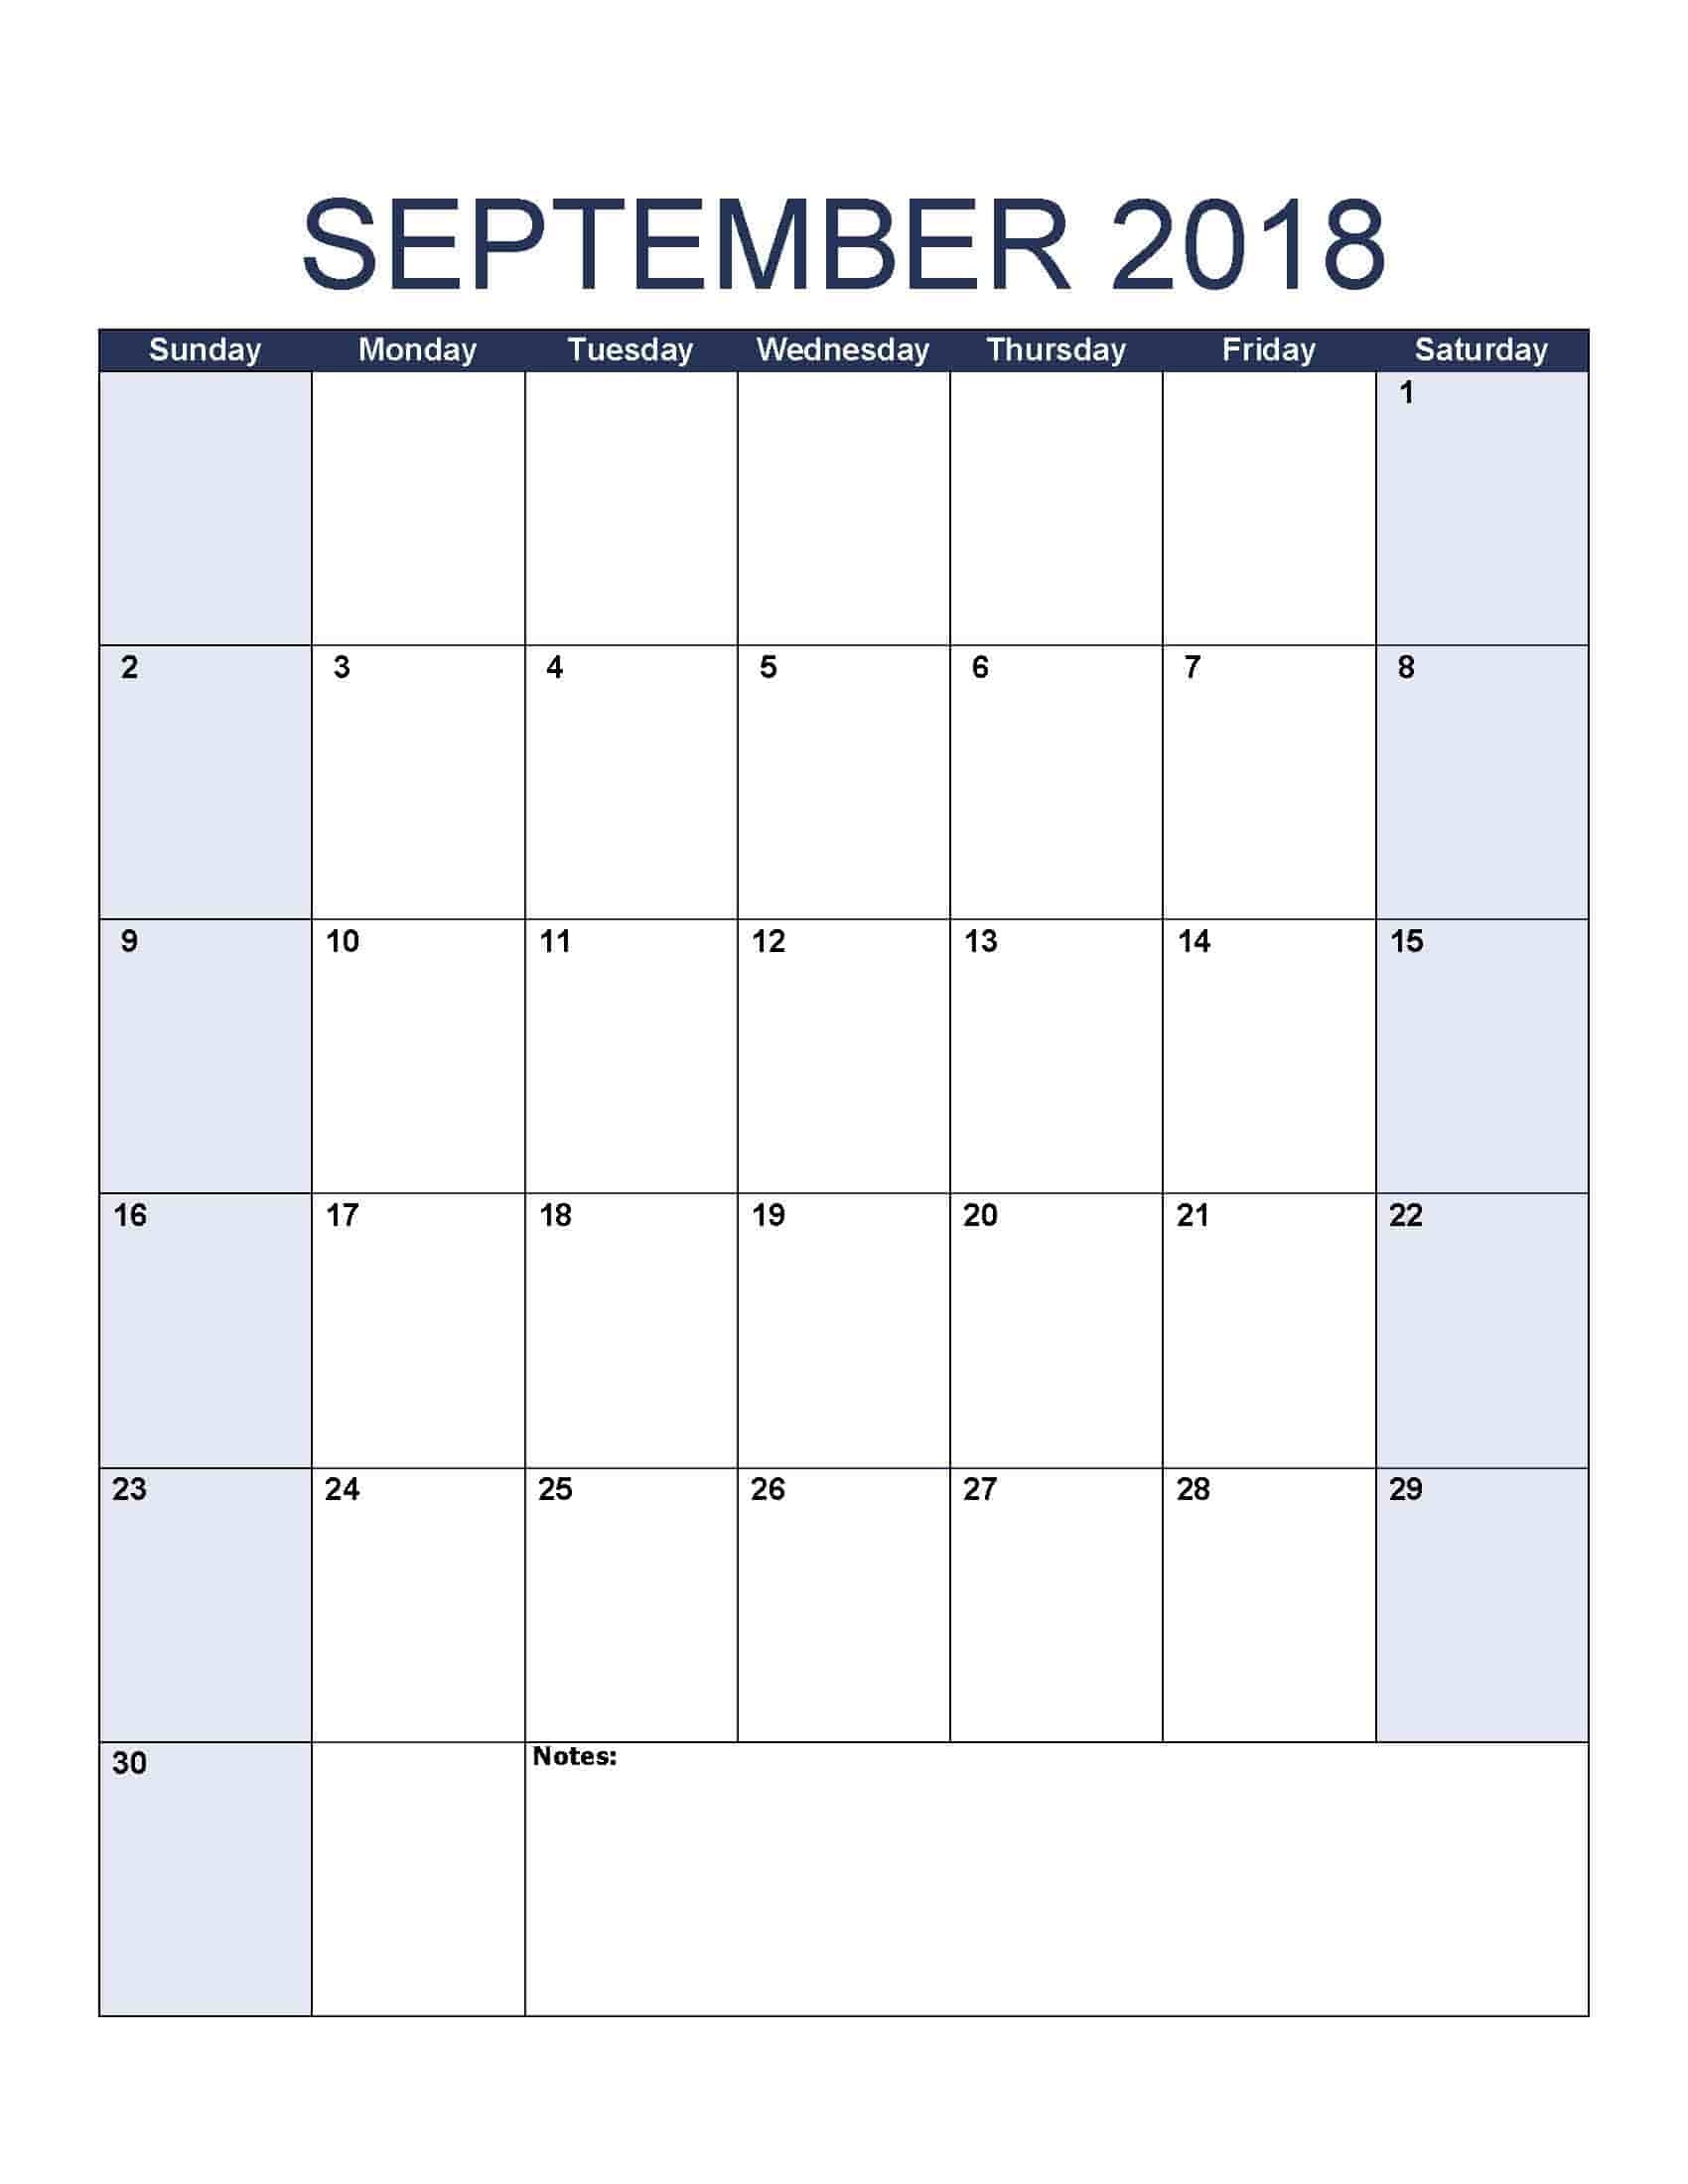 September 2018 Calendar - Free, Printable Calendar Templates-Blank Calendar Template With Jewish Holidays